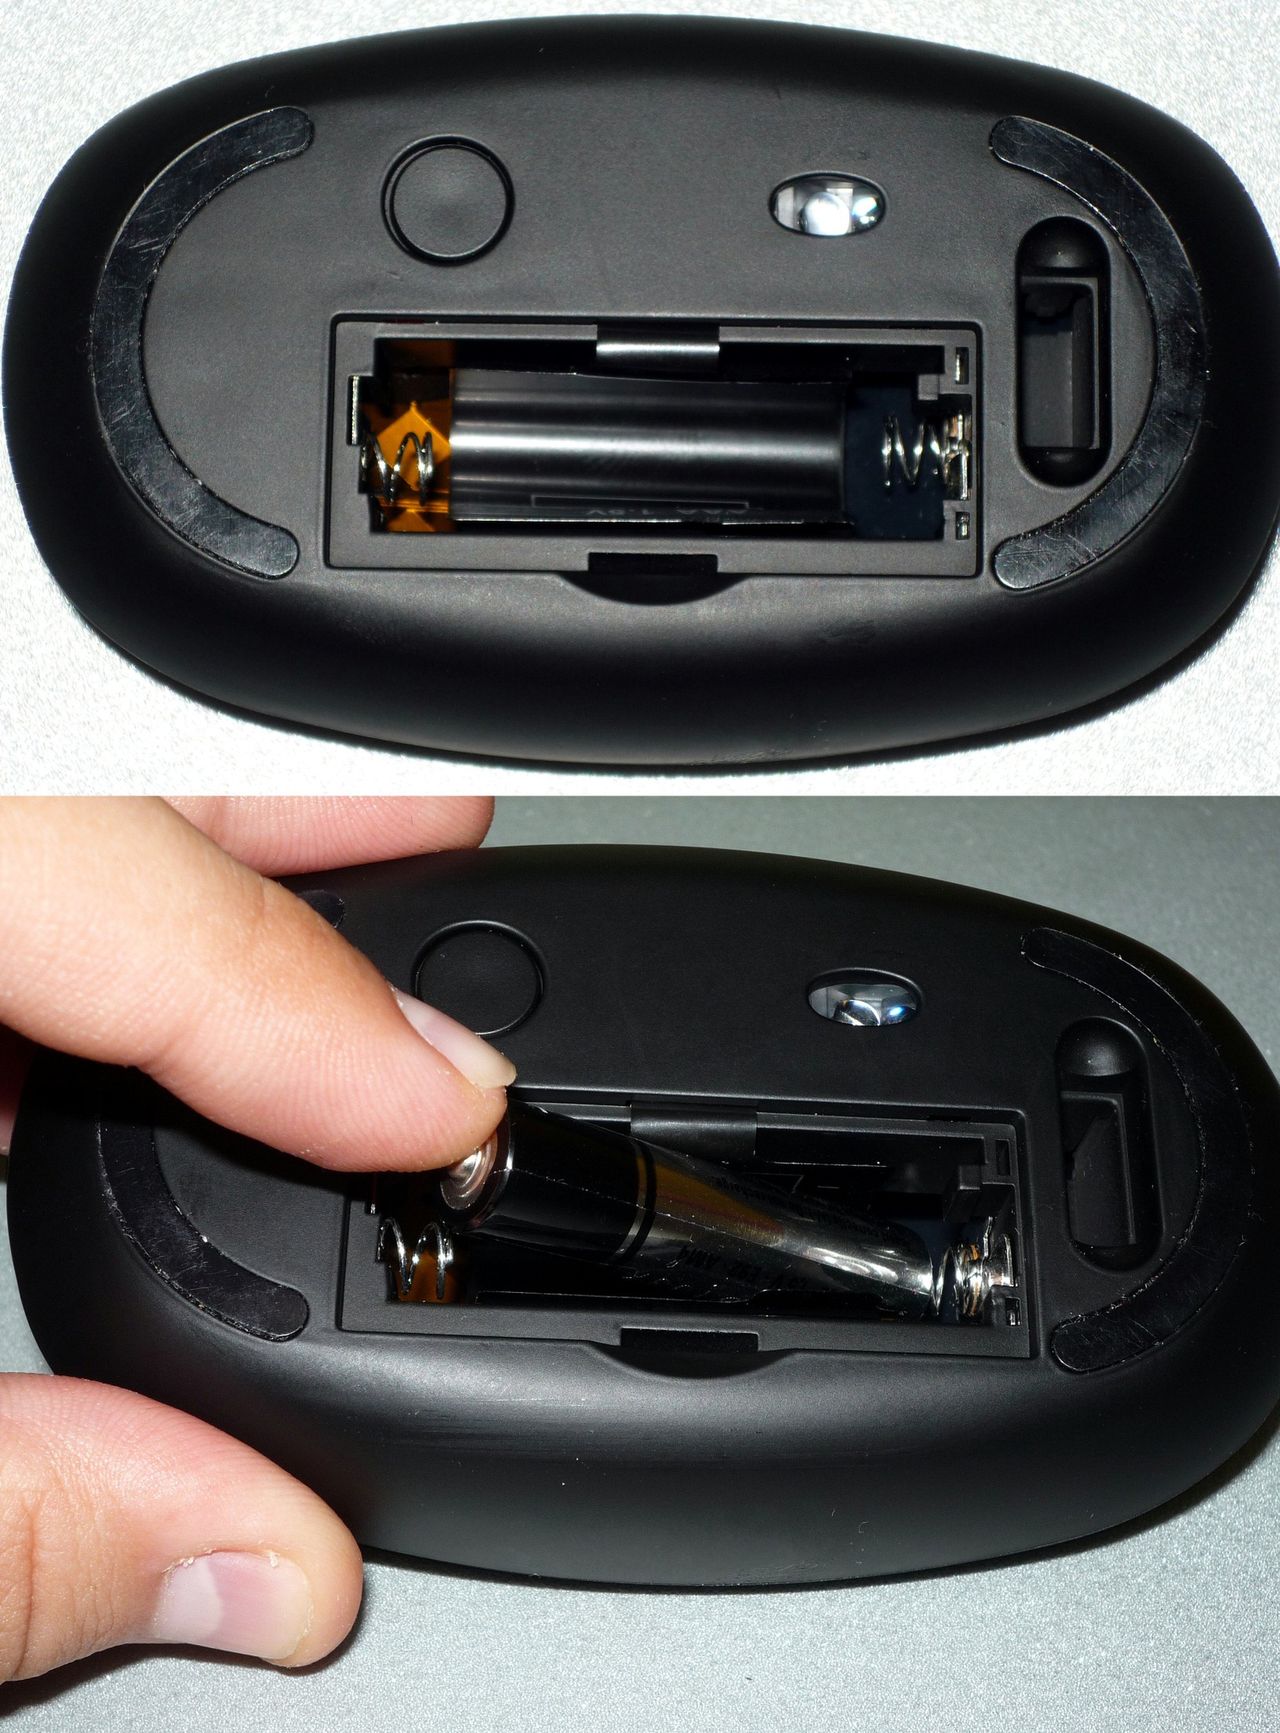 Manhattan Stealth Touch Mouse - instalacja baterii nie musi być prosta